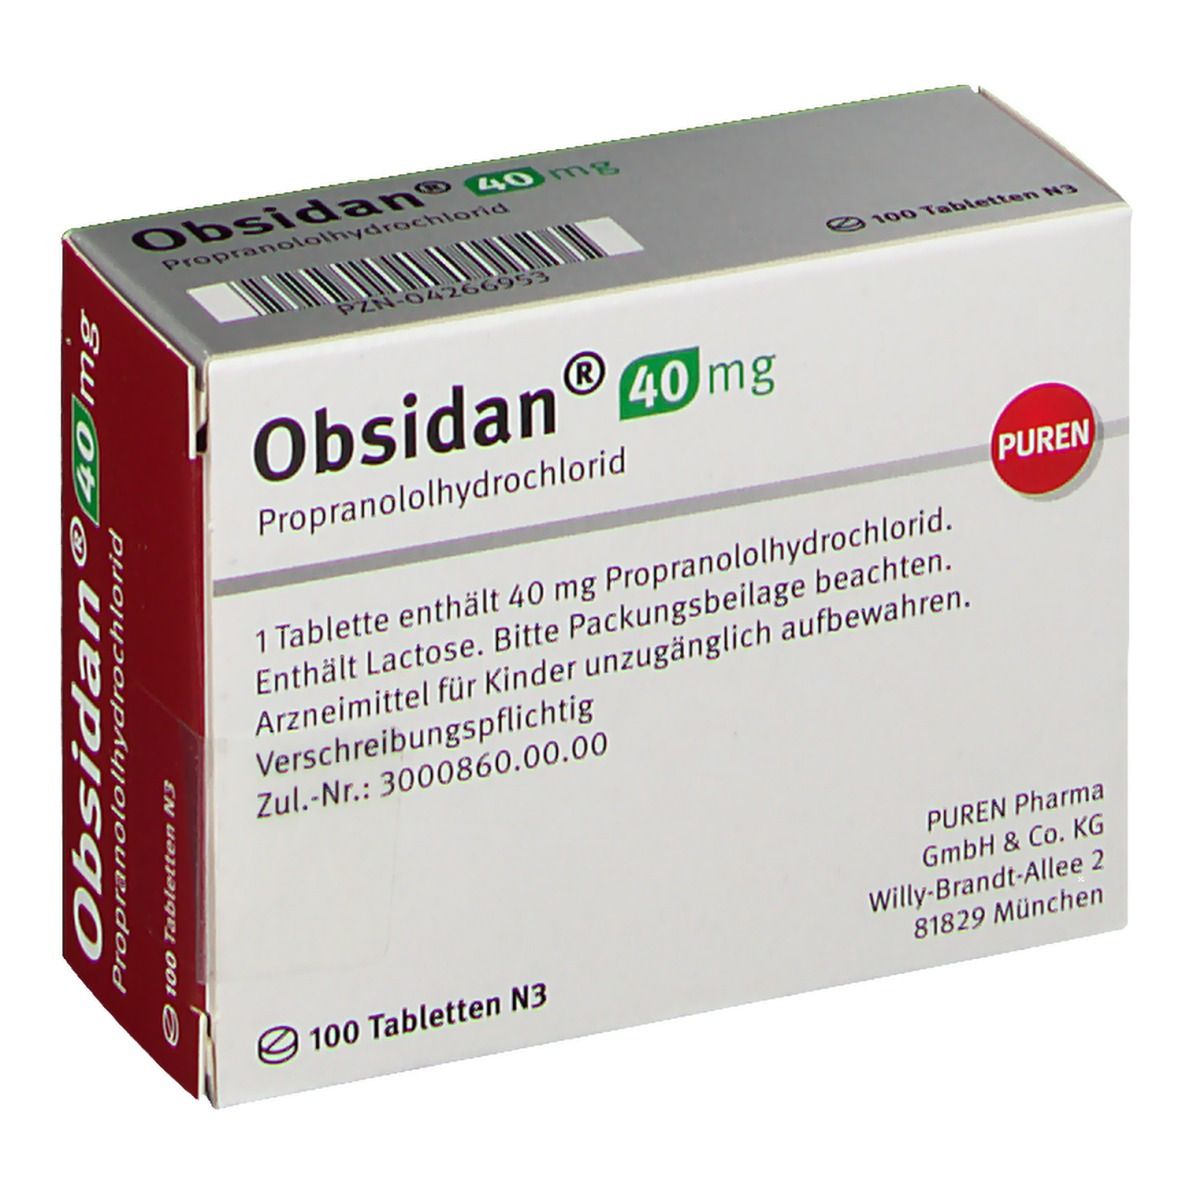 Obsidan® 40 mg